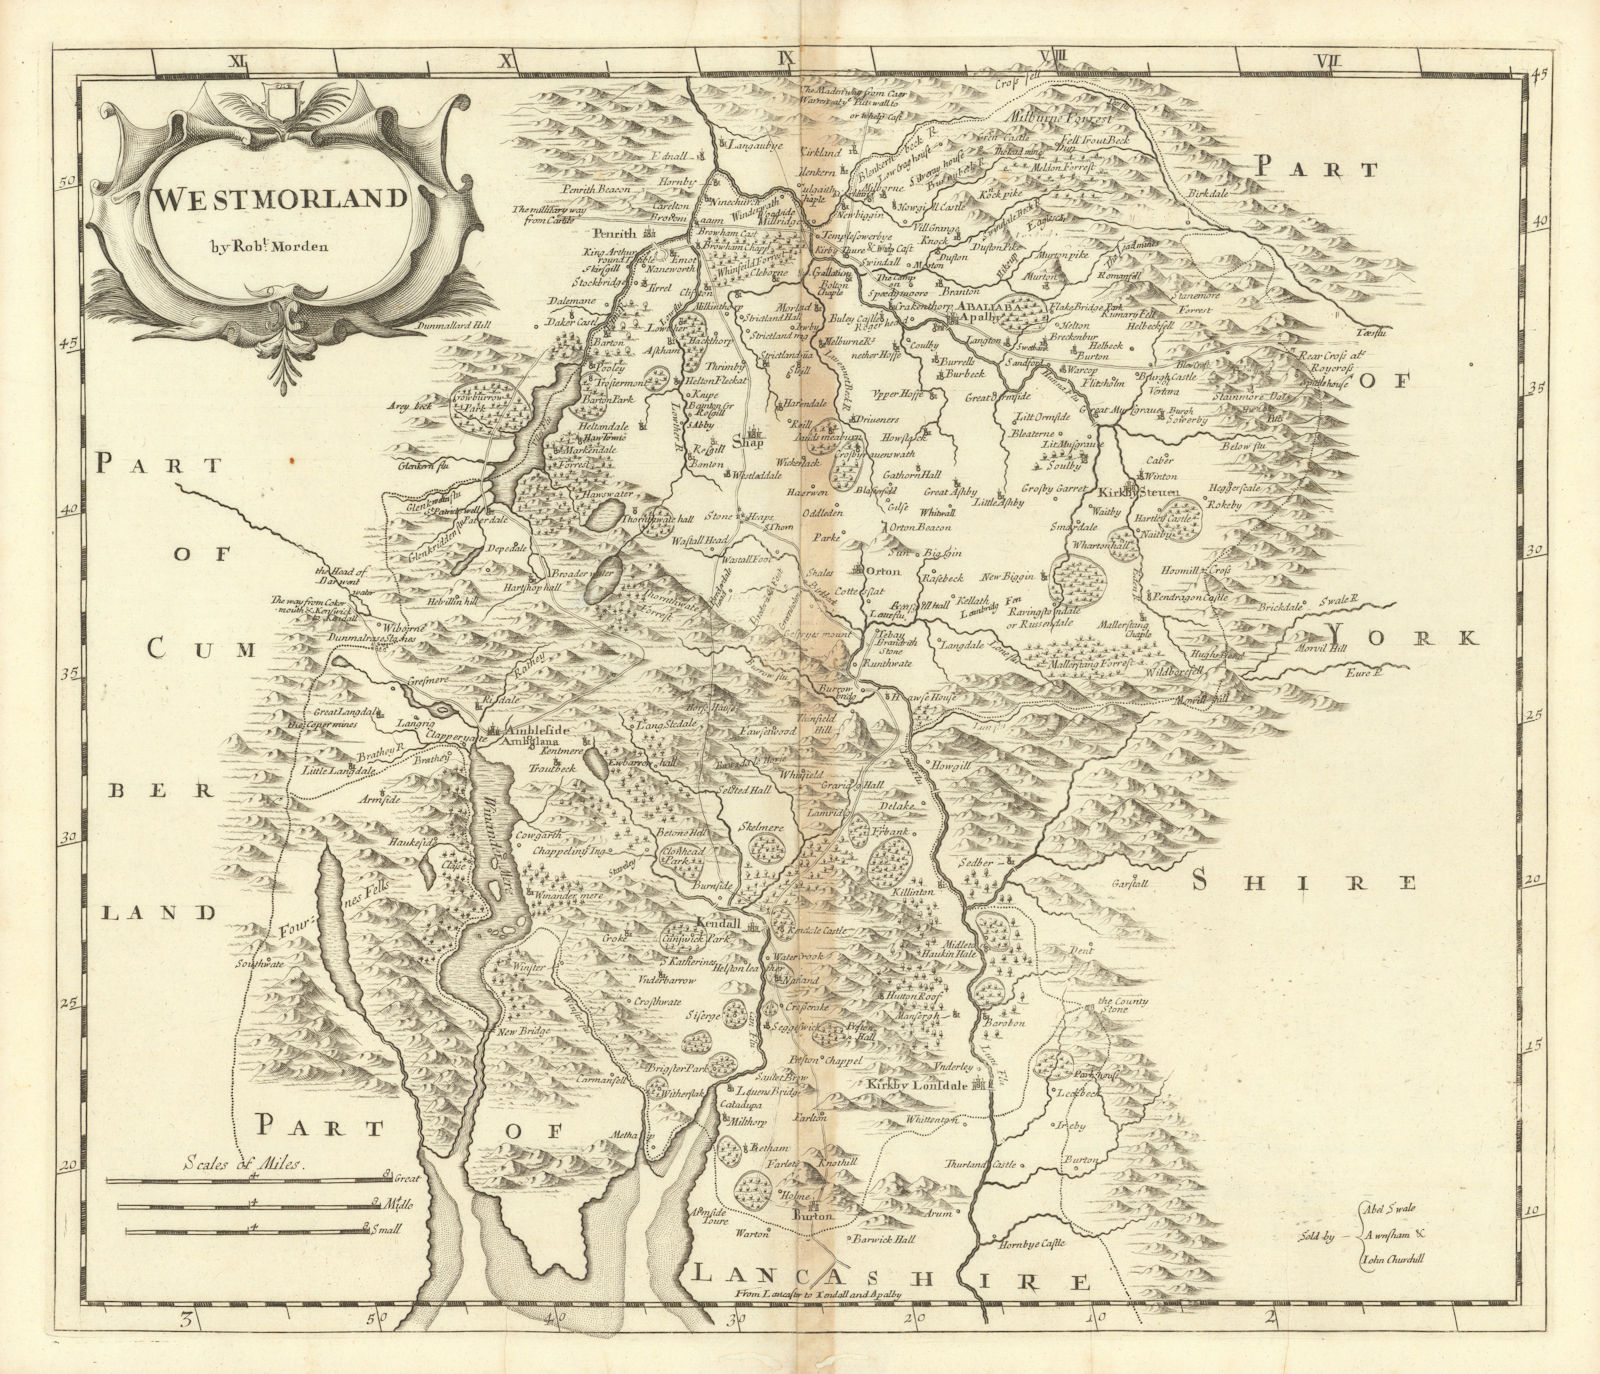 Westmoreland. 'WESTMORLAND' by ROBERT MORDEN from Camden's Britannia 1695 map